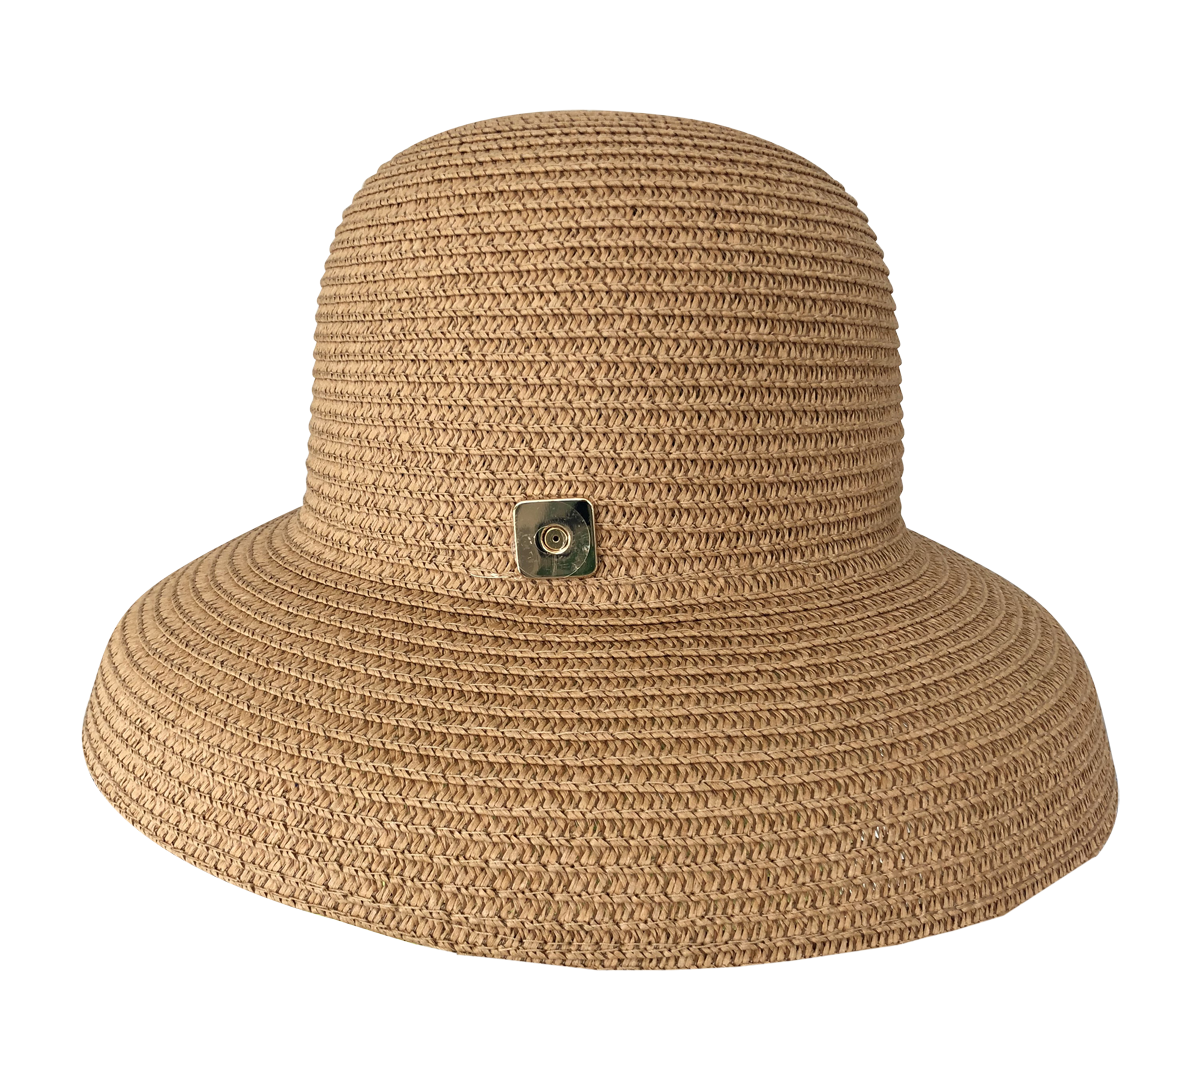 Hepburn Hat Petite Brim In Khaki